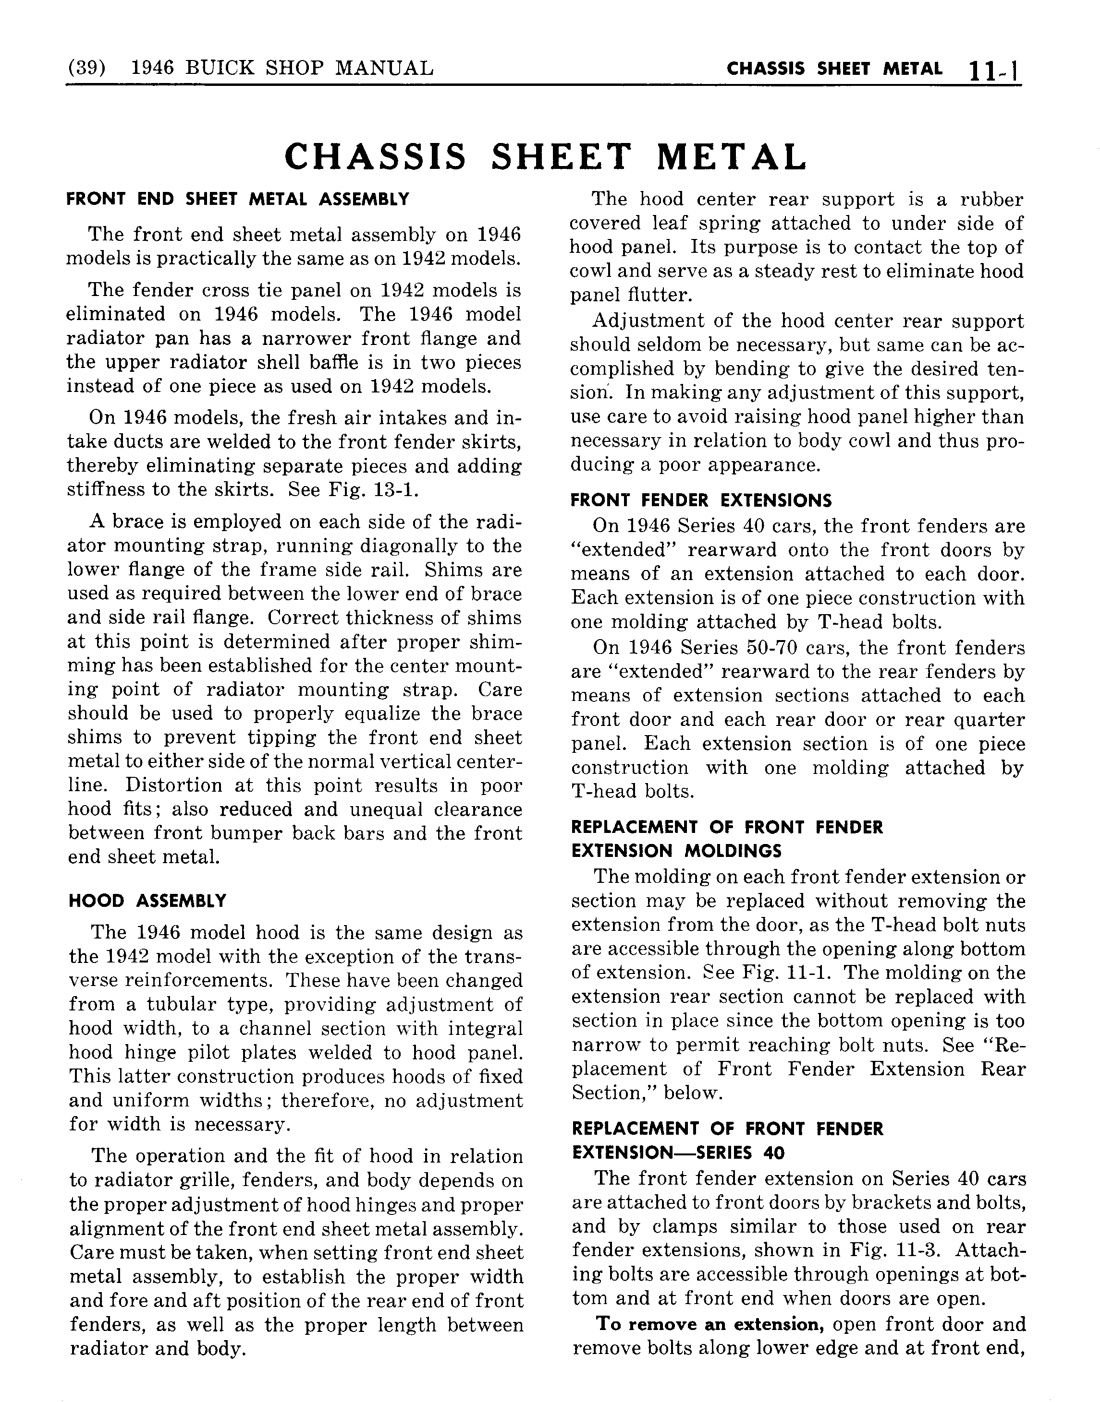 n_11 1946 Buick Shop Manual - Chassis Sheet Metal-001-001.jpg